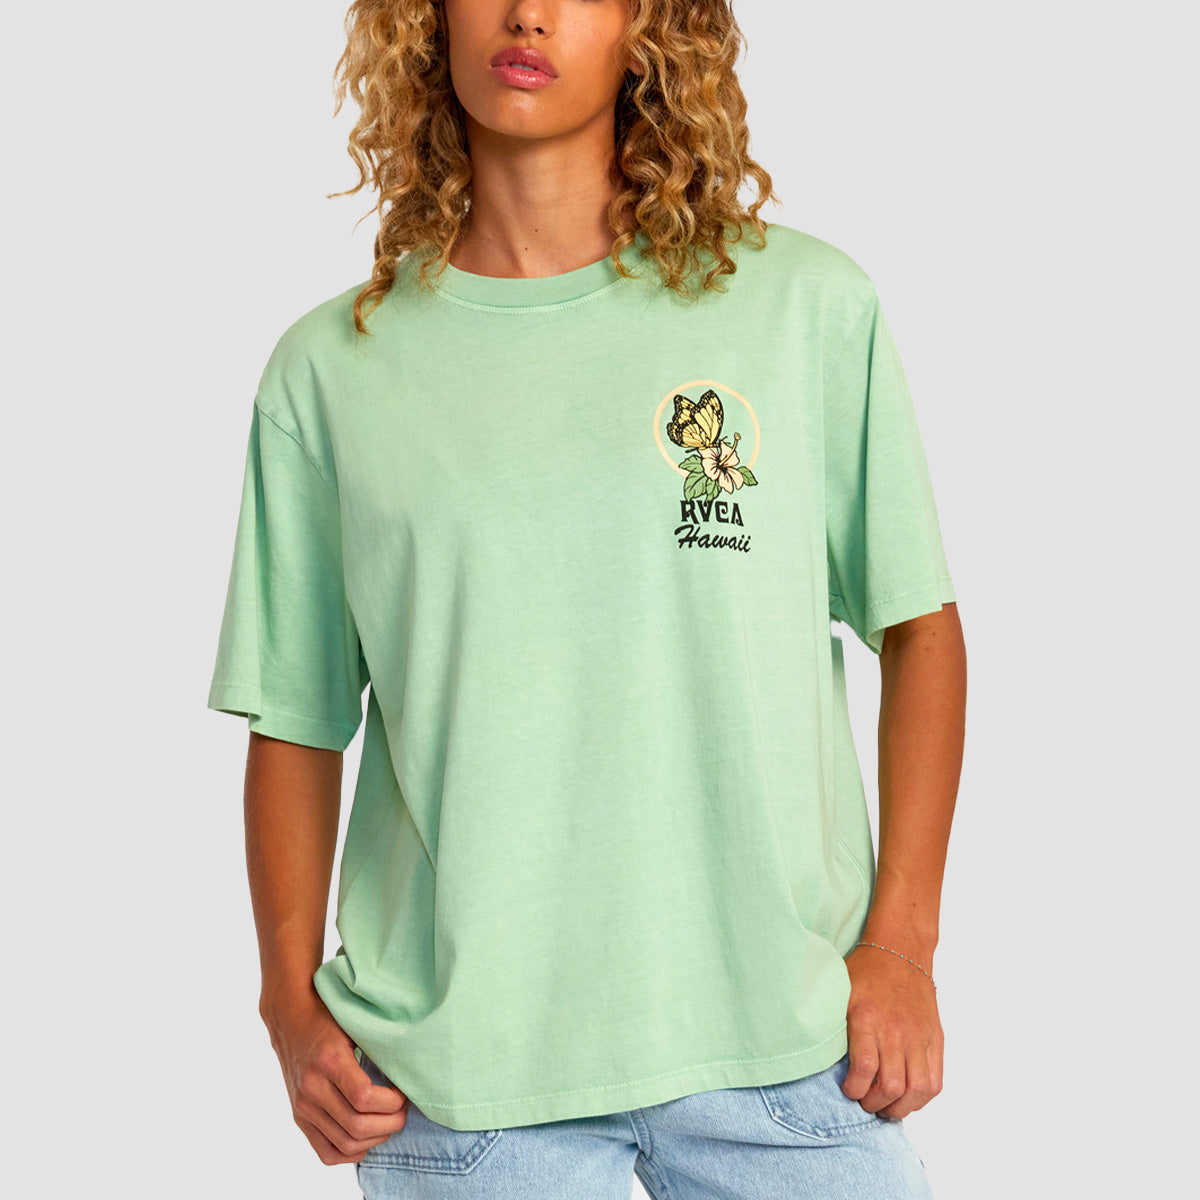 RVCA Hibiscus Hawaii T-Shirt Seafoam - Womens